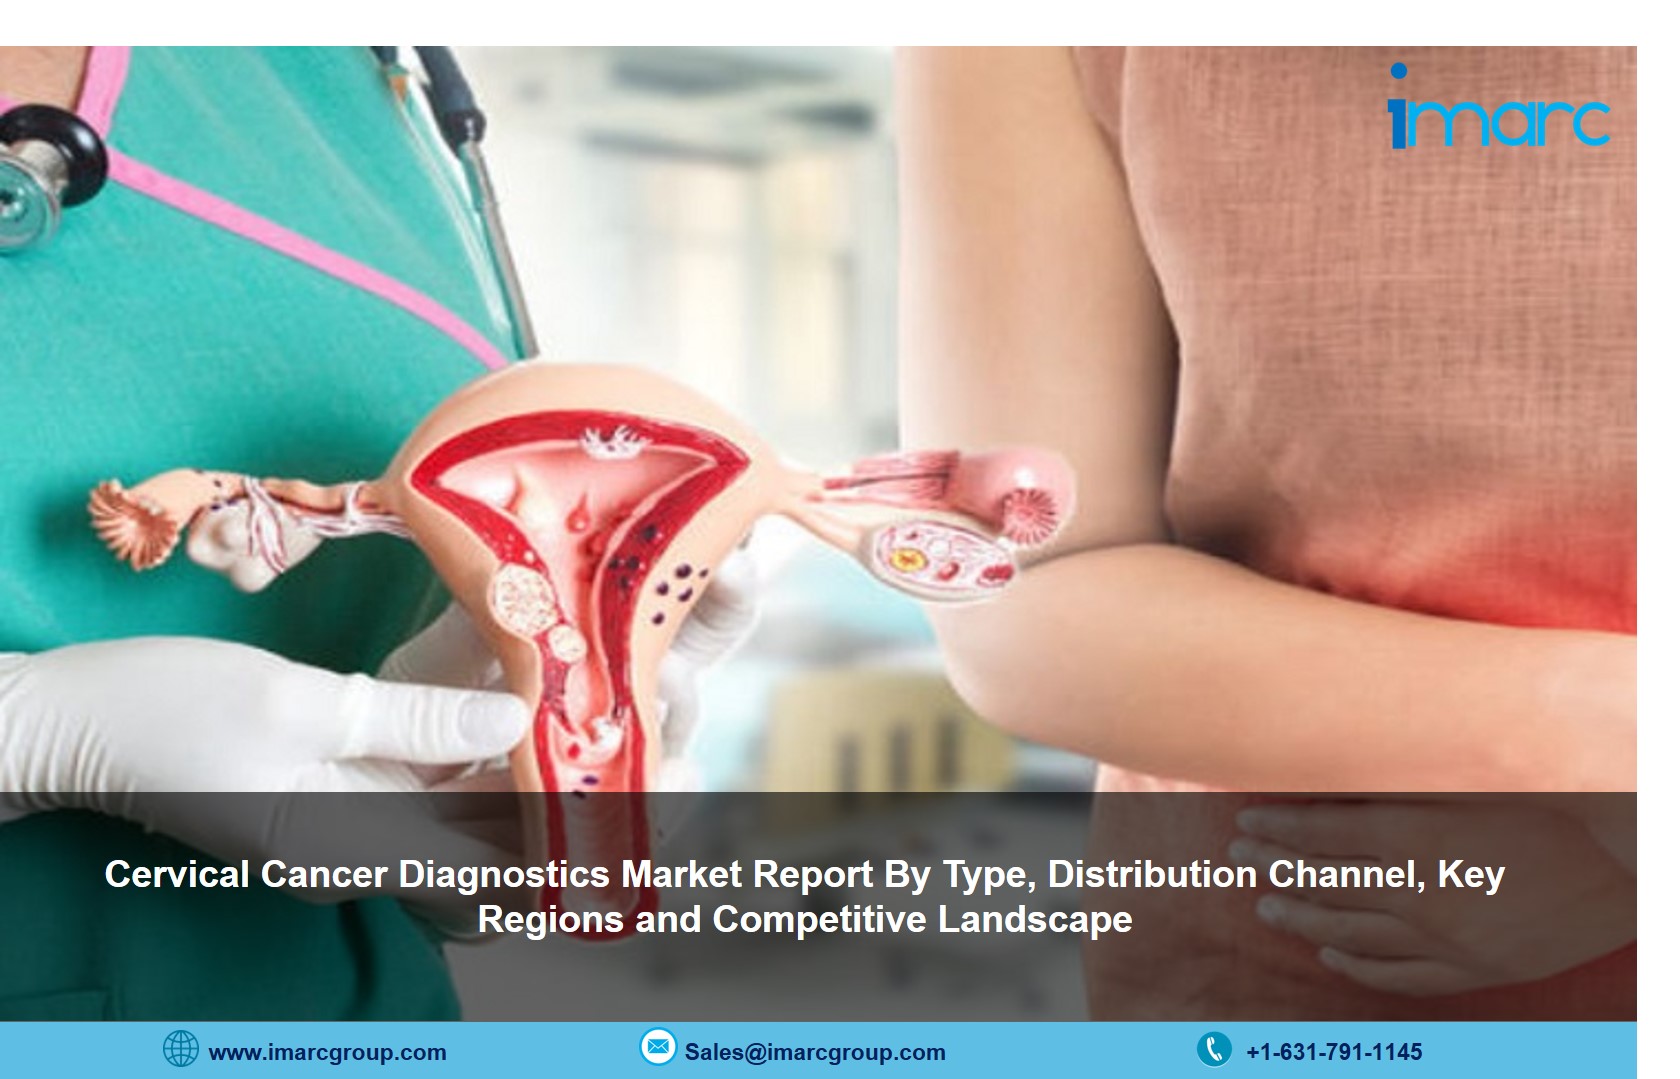 Cervical Cancer Diagnostics Market 2021-26: Size. Share, Trends by Healthcare Industry